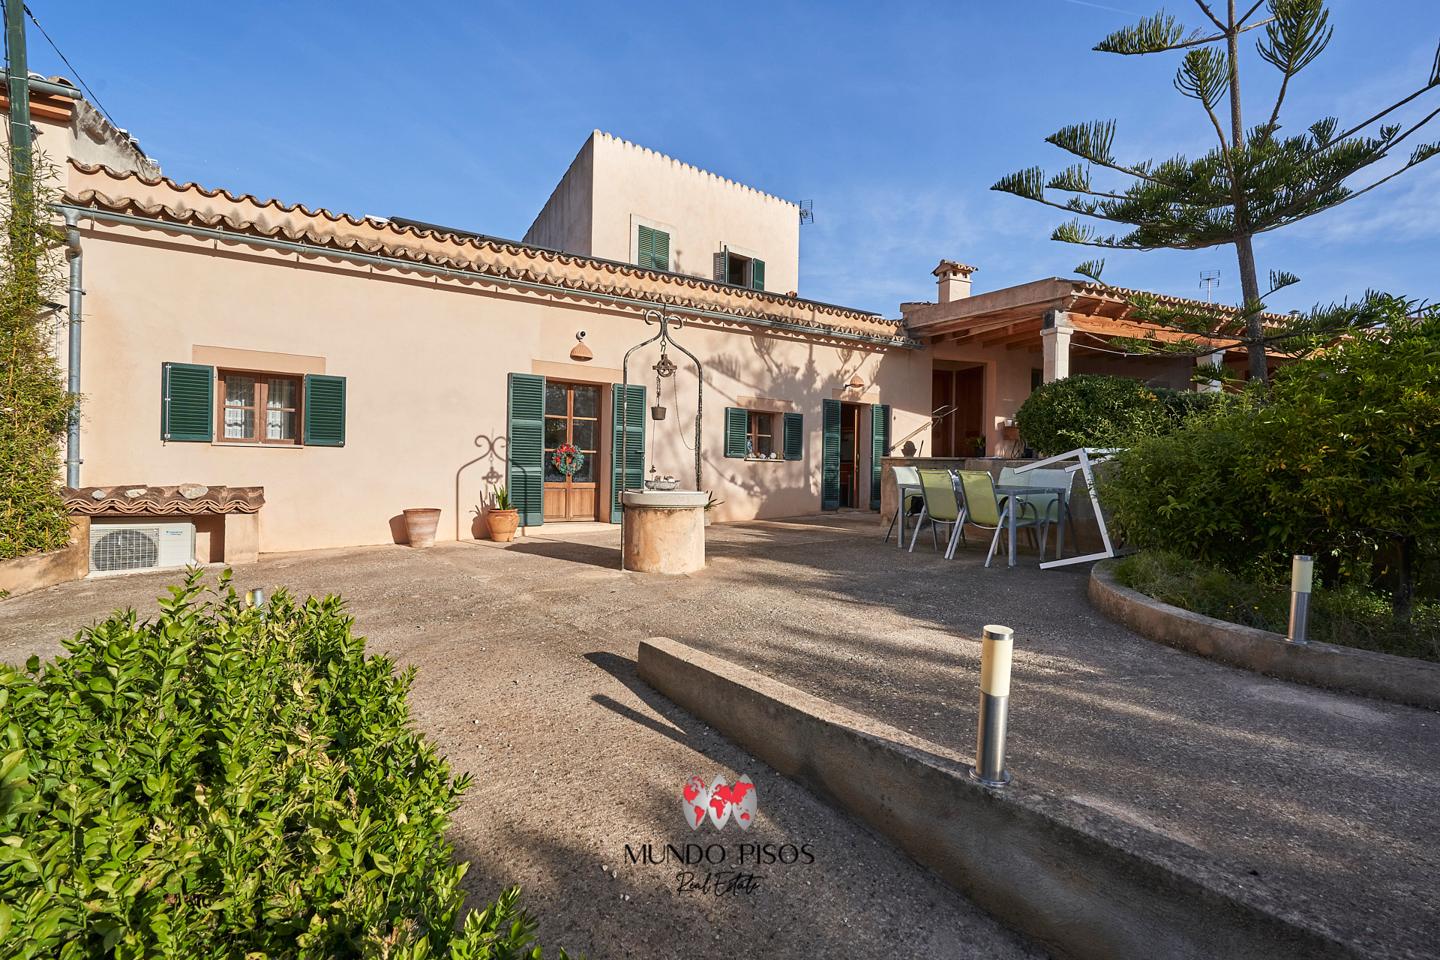 Mallorcan house in Establiments, Palma de Mallorca, Balearic Islands.